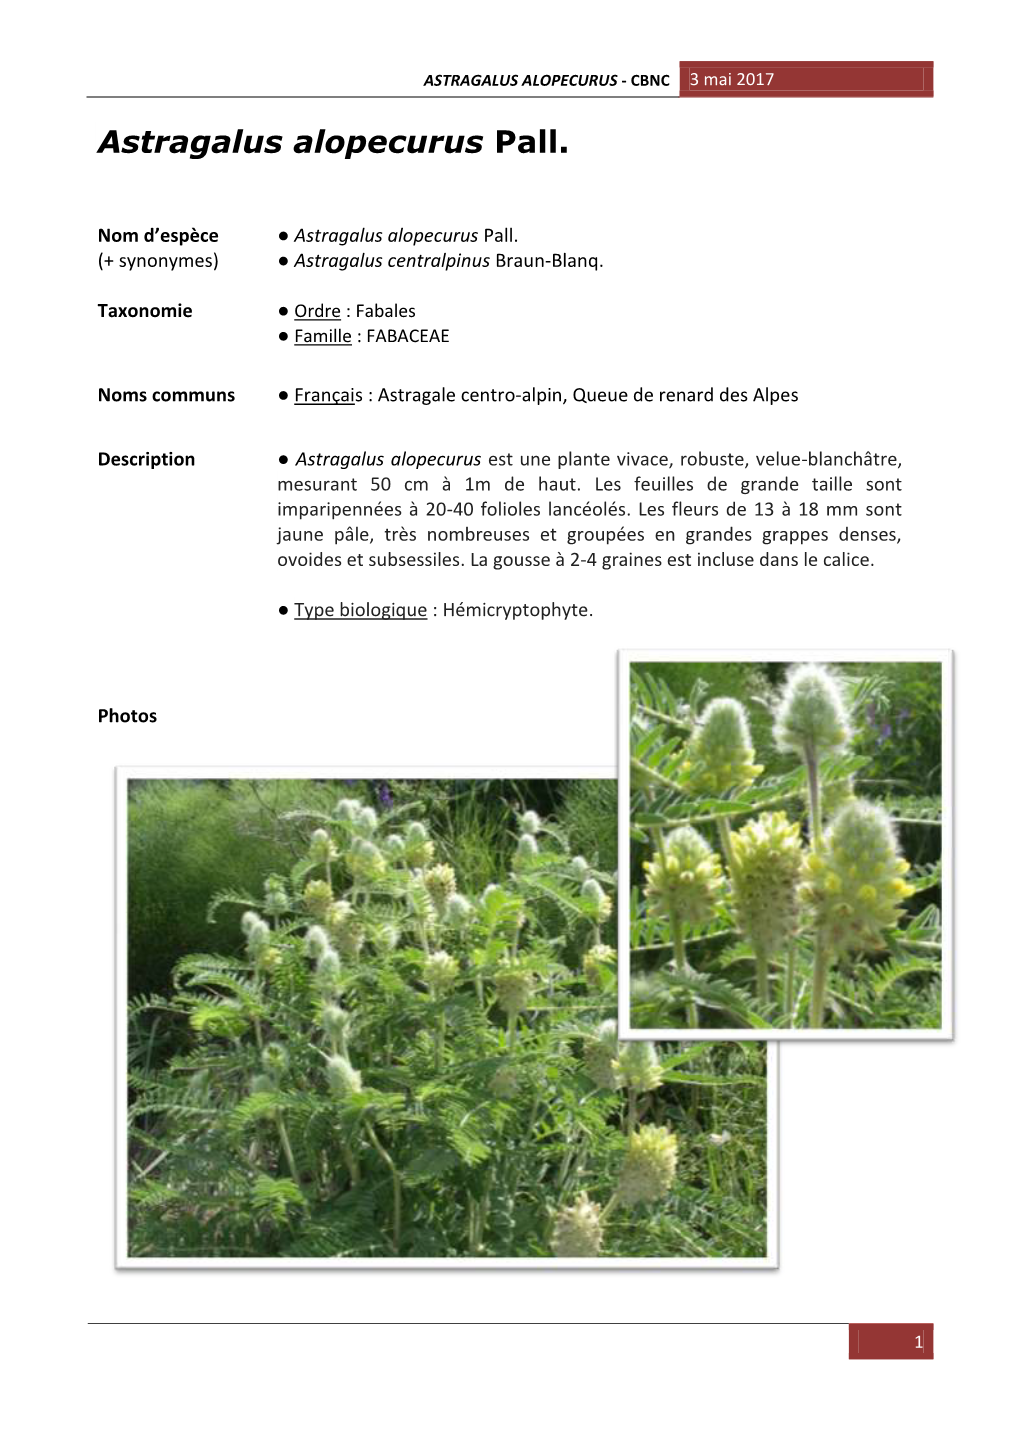 Astragalus Alopecurus Pall